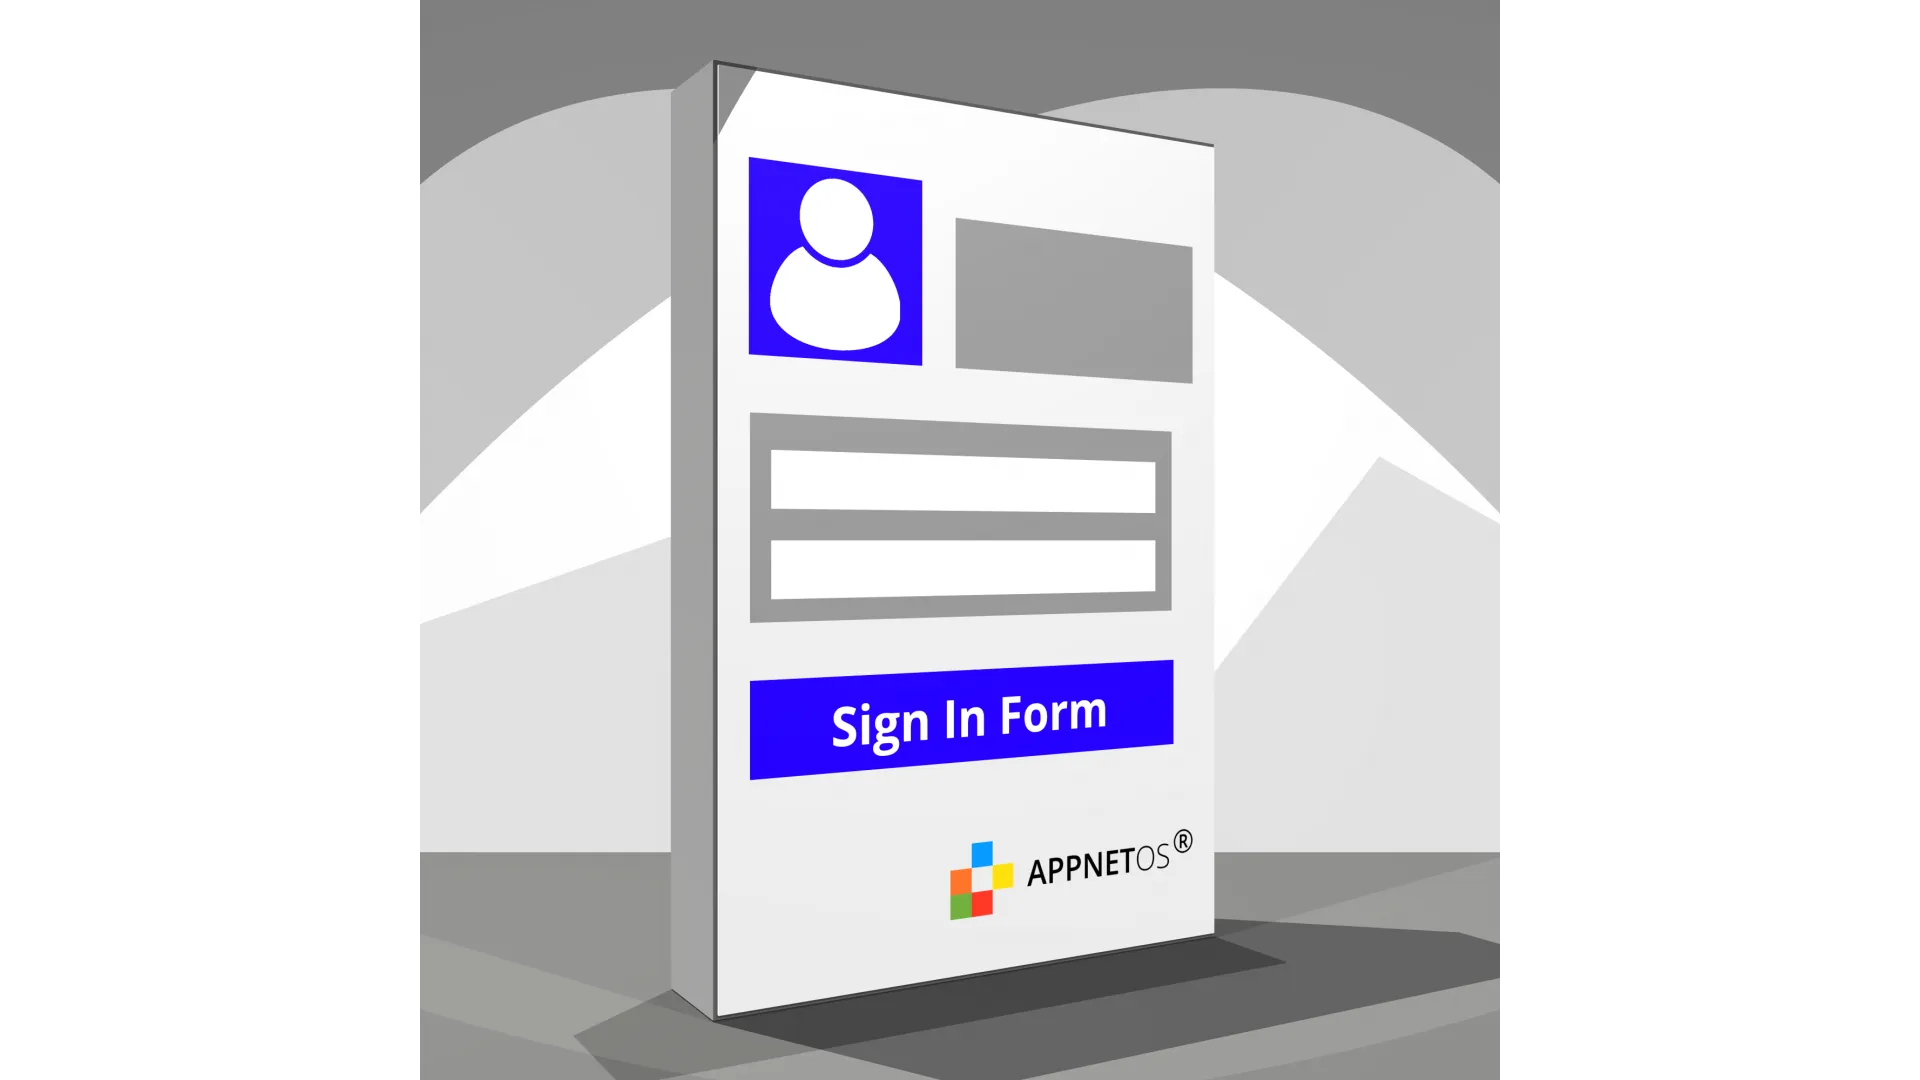 APPNET OS Formulario de inicio de sesión